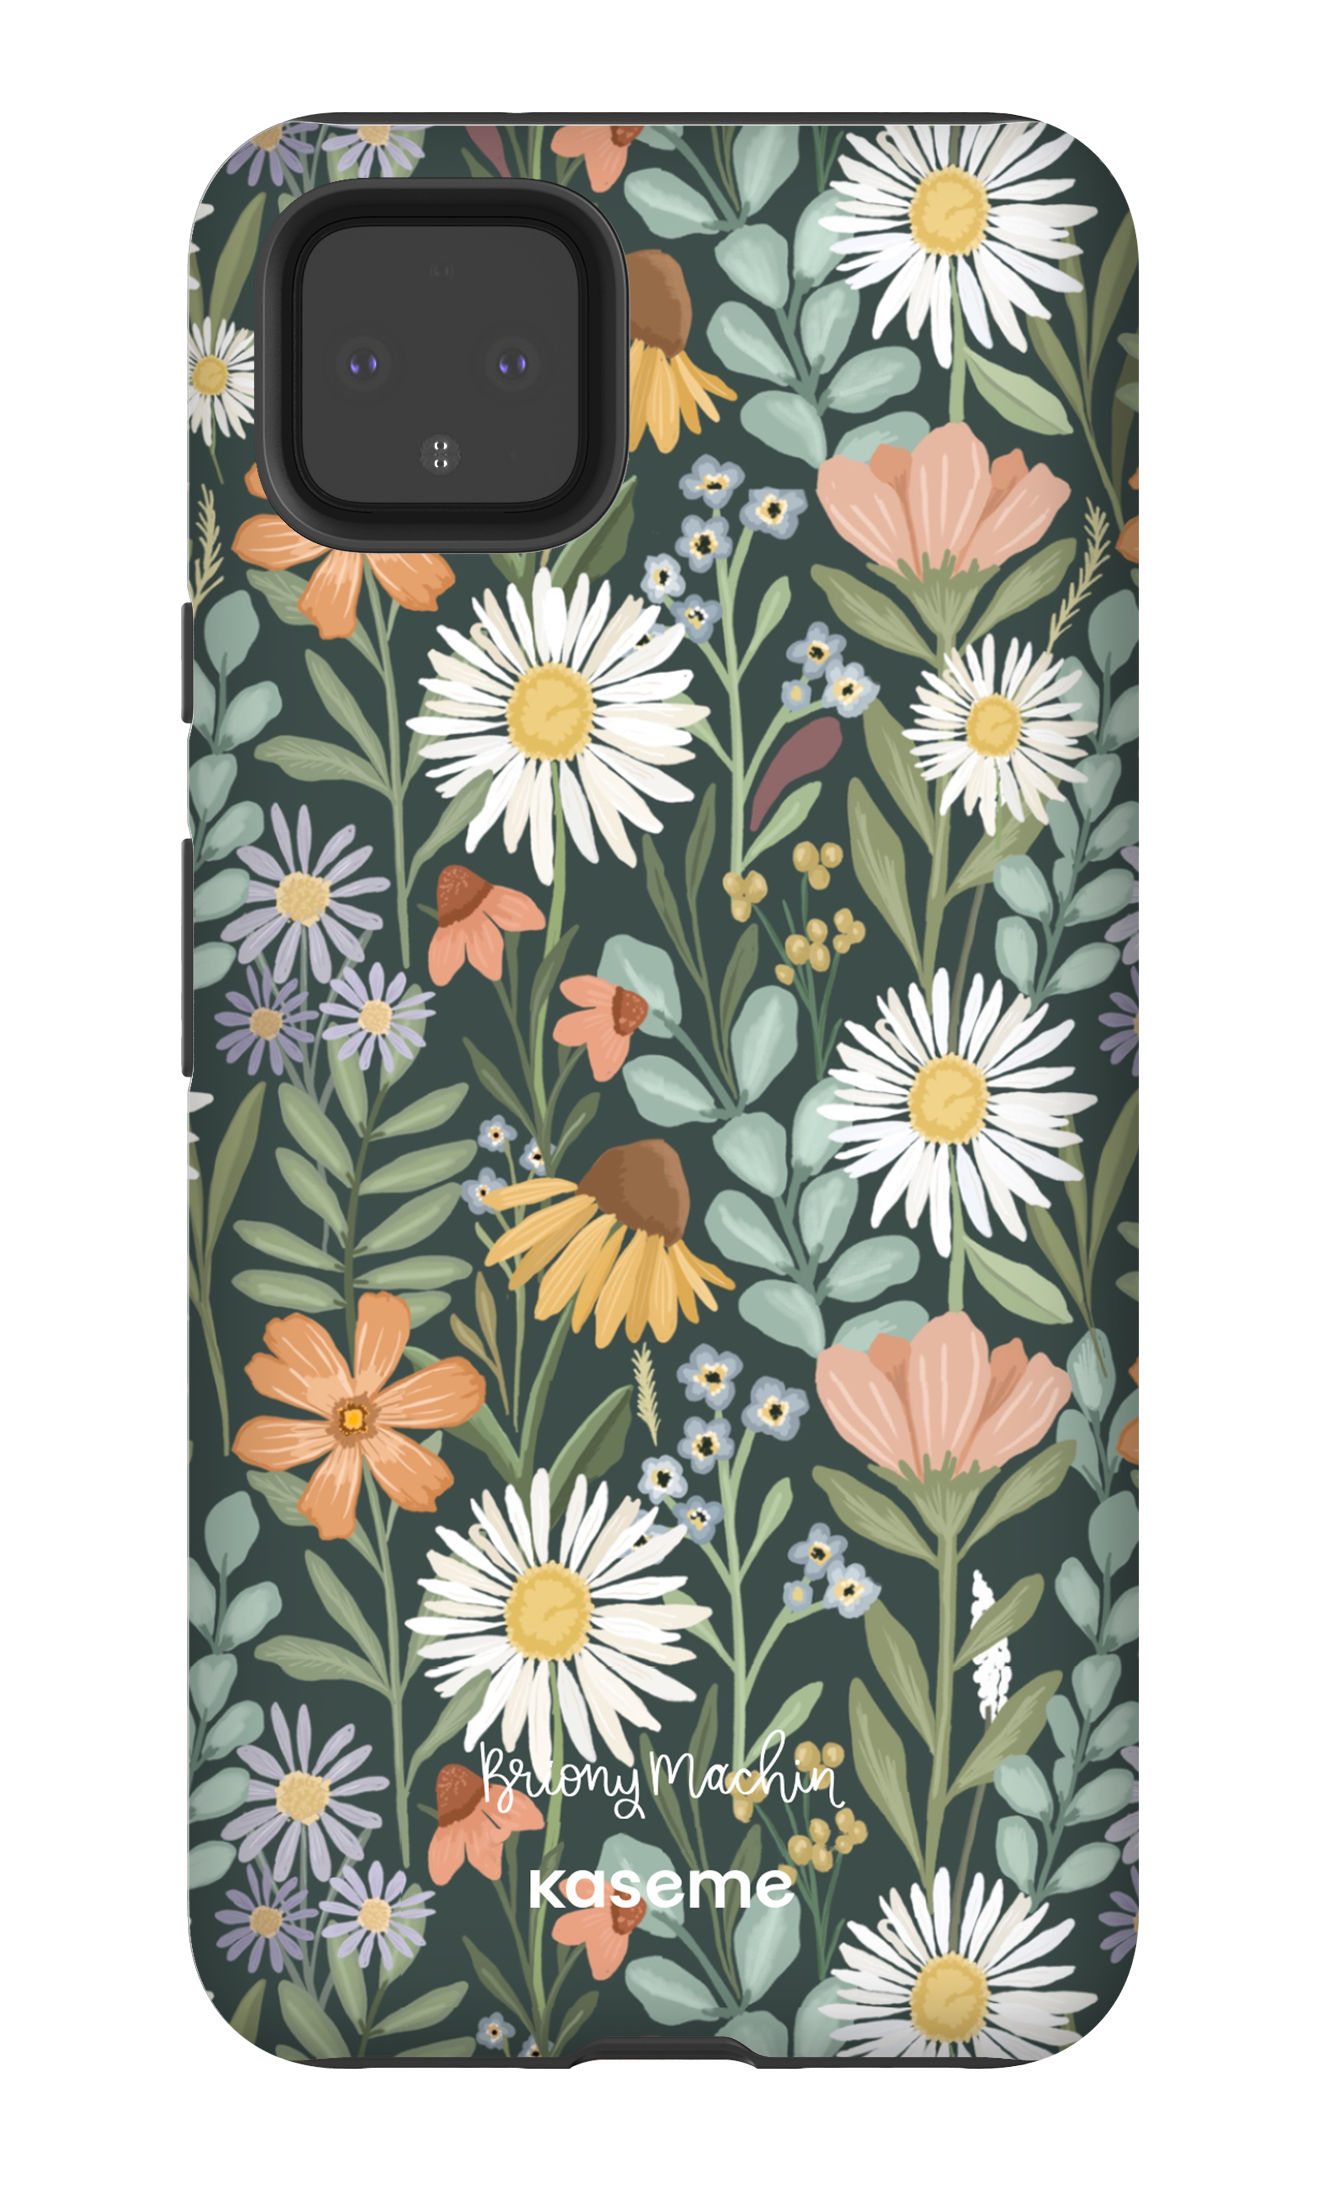 Sending Flowers Green by Briony Machin - Google Pixel 4 XL